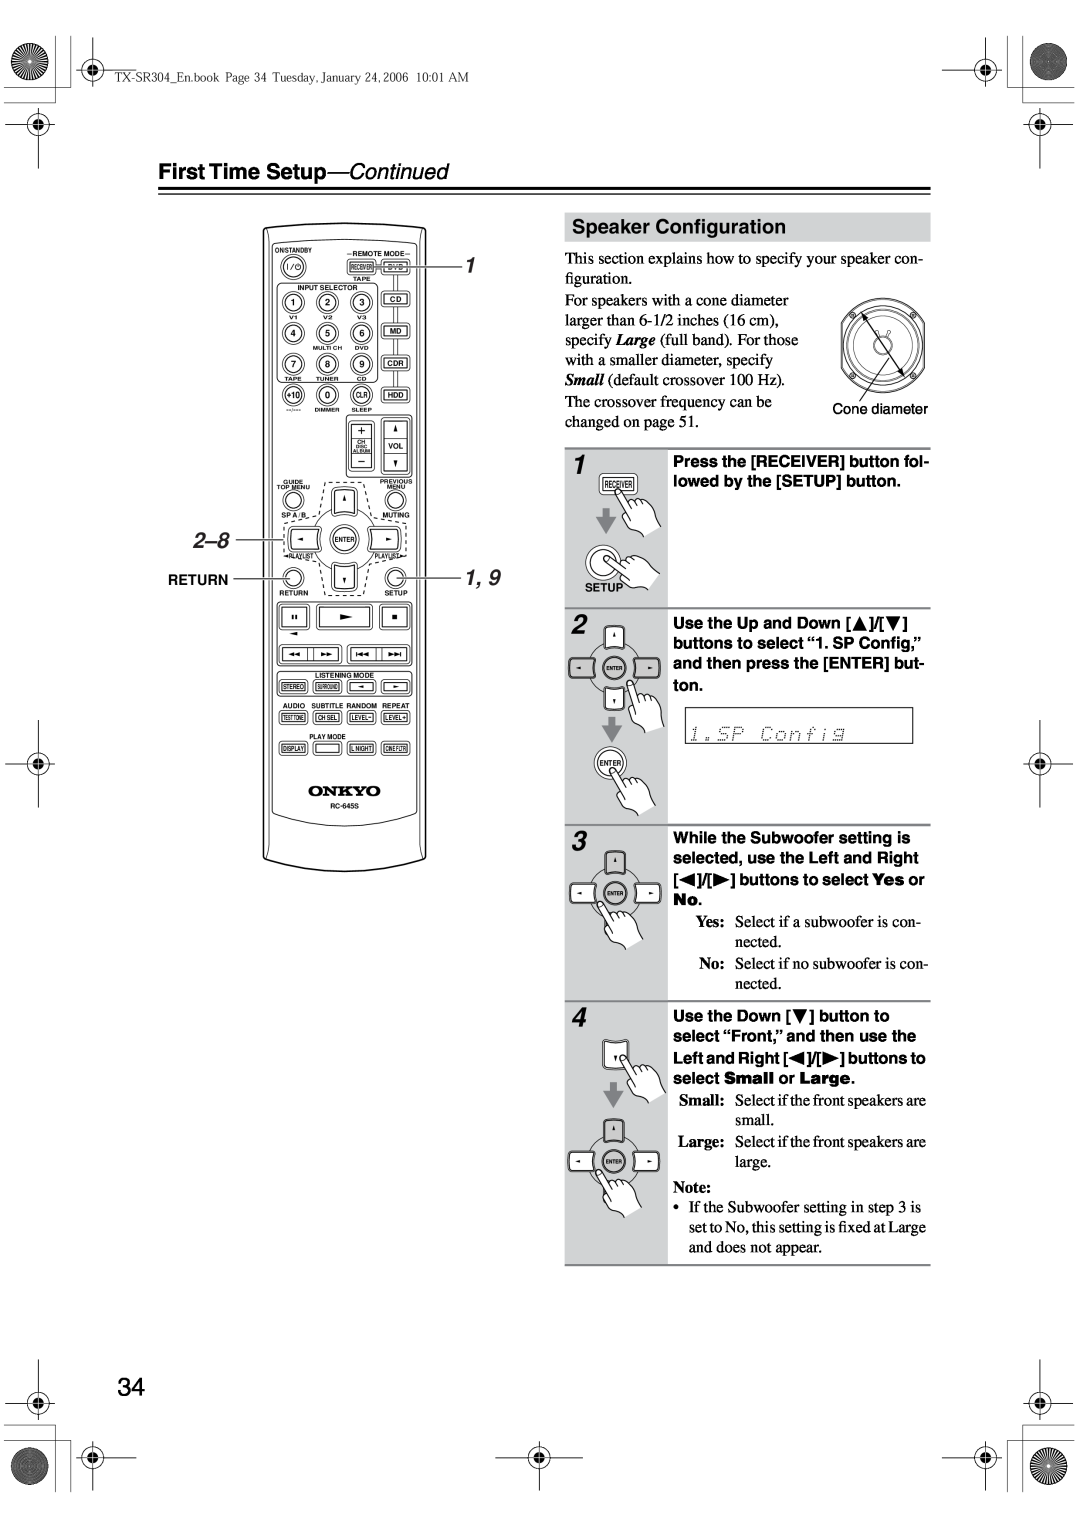 Onkyo TX-SR404, TX-SR8440, TX-SR304E instruction manual First Time Setup-Continued, Speaker Conﬁguration 